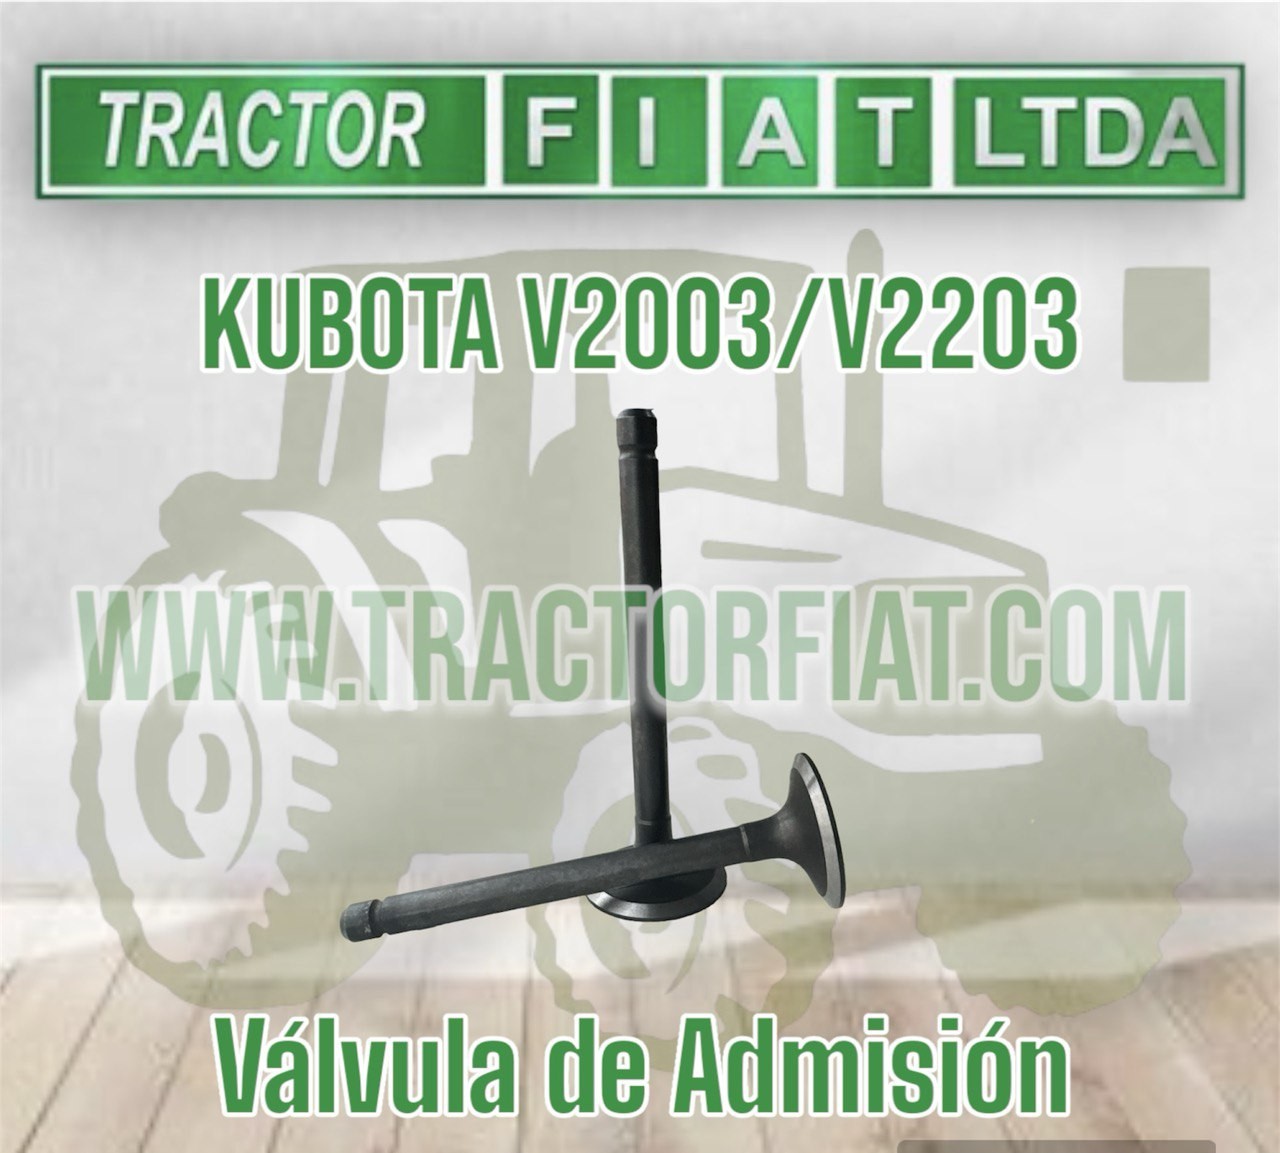 VALVULA DE ADMISION- MOTOR KUBOTA V2203/V2003 PLATO PEQUEÑO  33,5MM